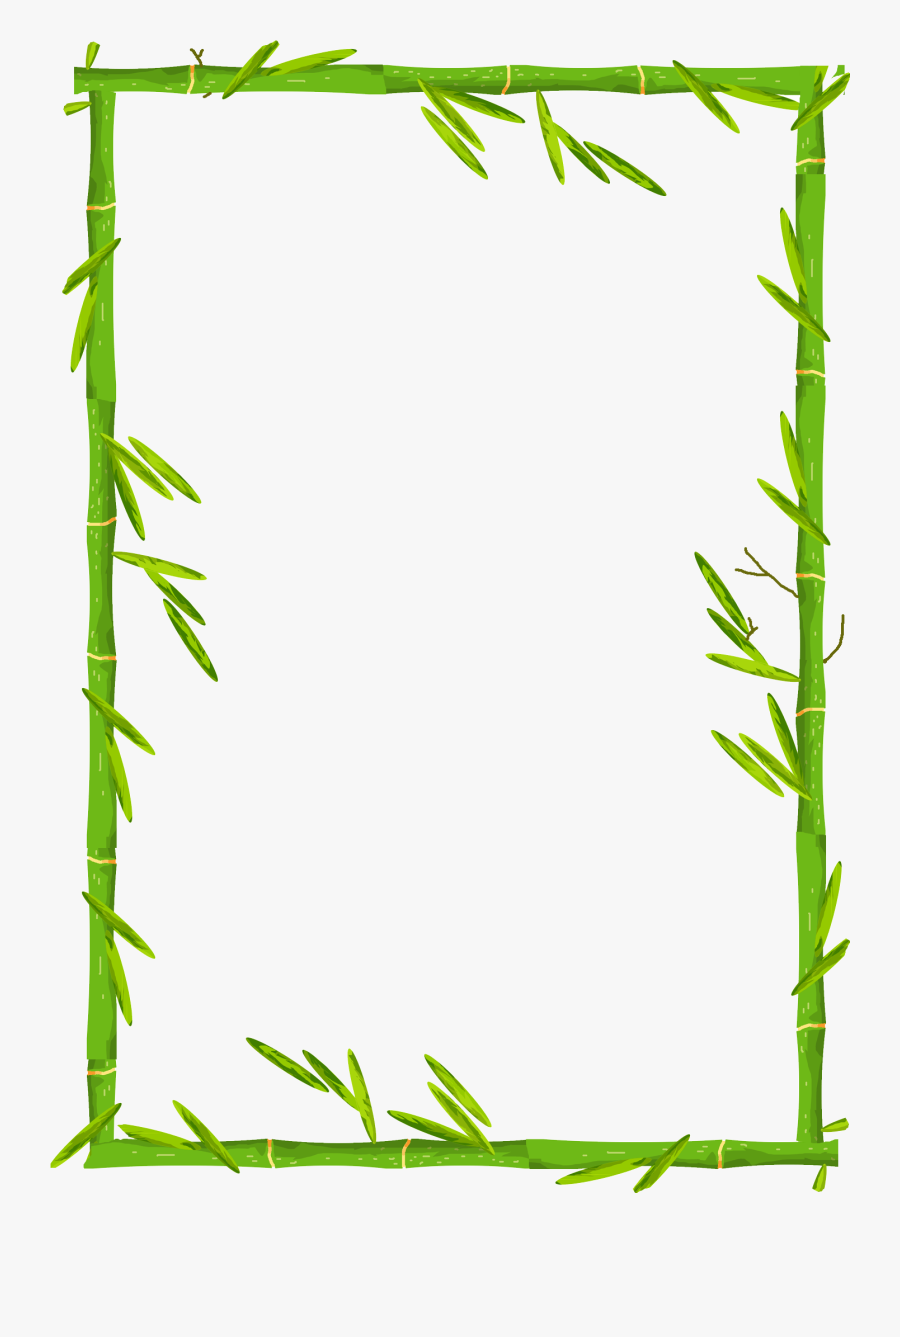 Bamboo Border Download Free Image - Frame Bamboo Border Design, Transparent Clipart